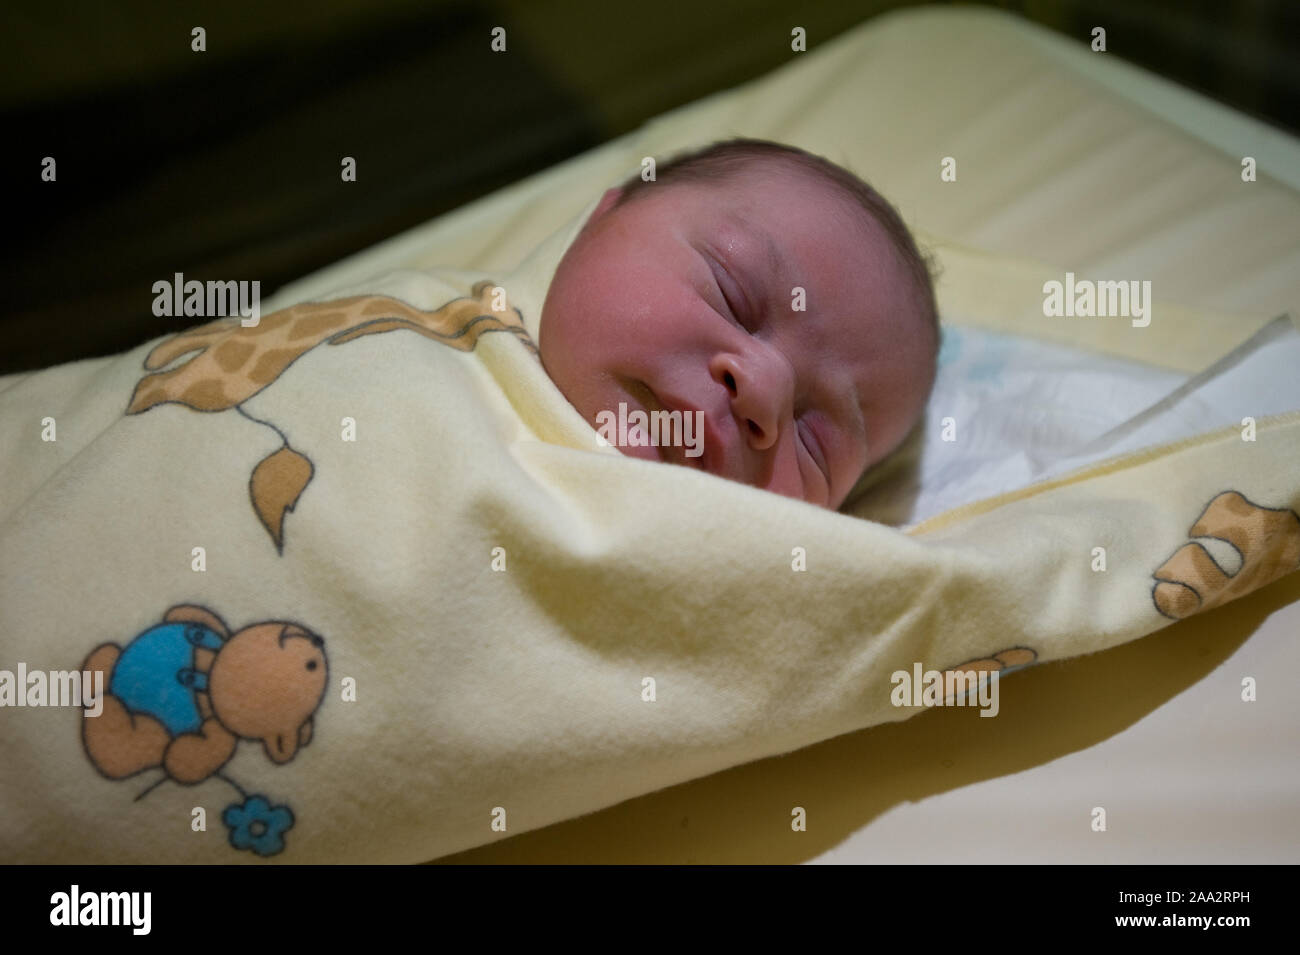 Baby girl moments after Cesarean Section. ©Marcin Rozpedowski/Alamy Stock Photo Stock Photo